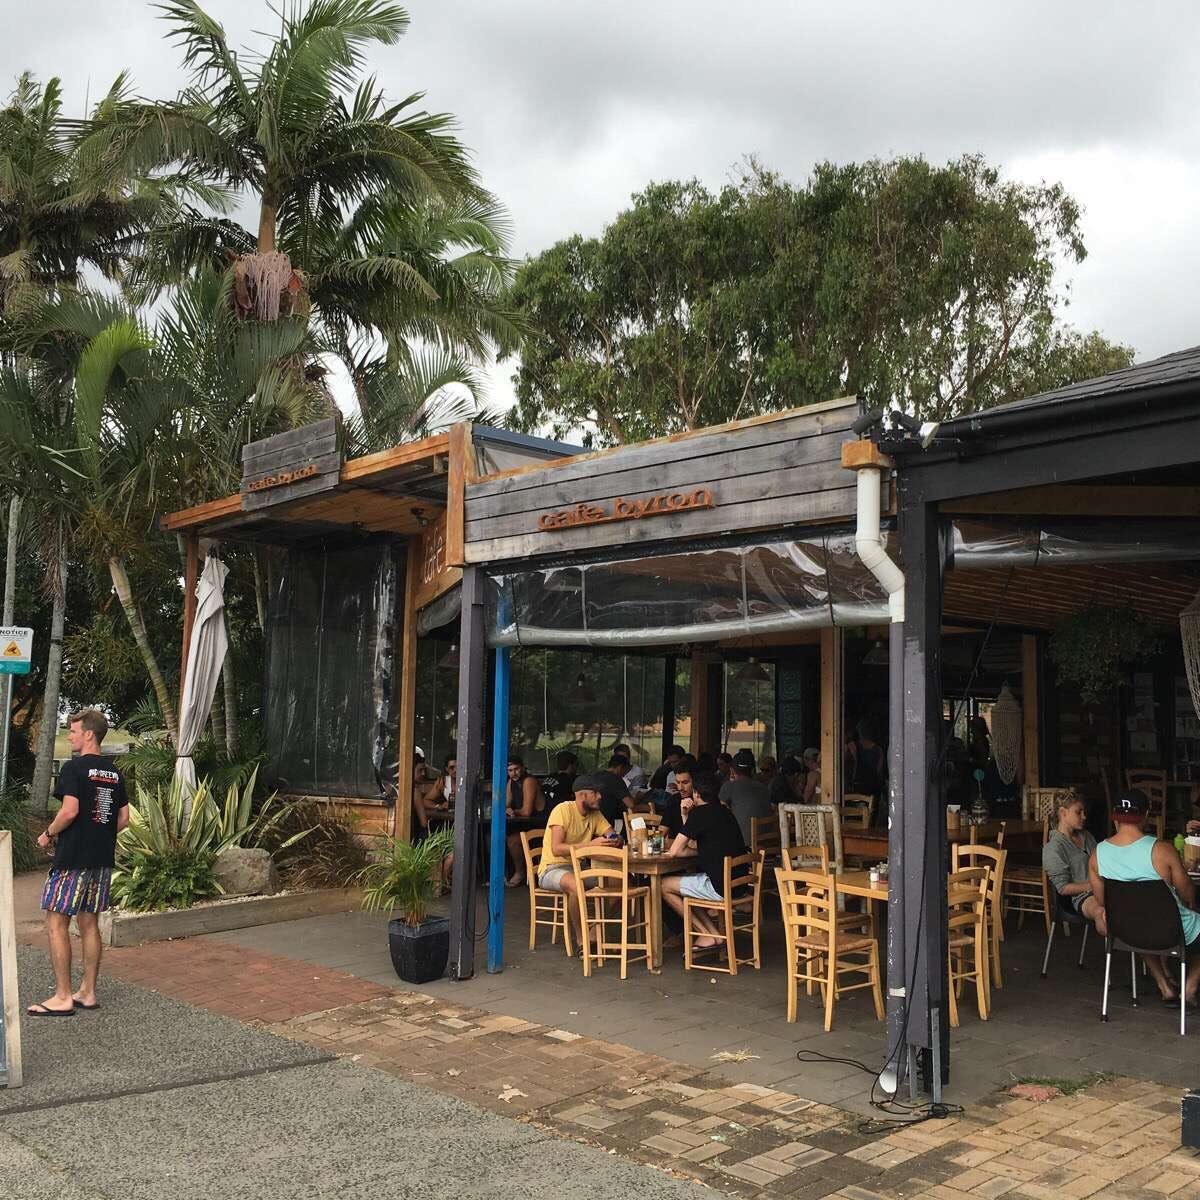 Cafe Byron - South Australia Travel